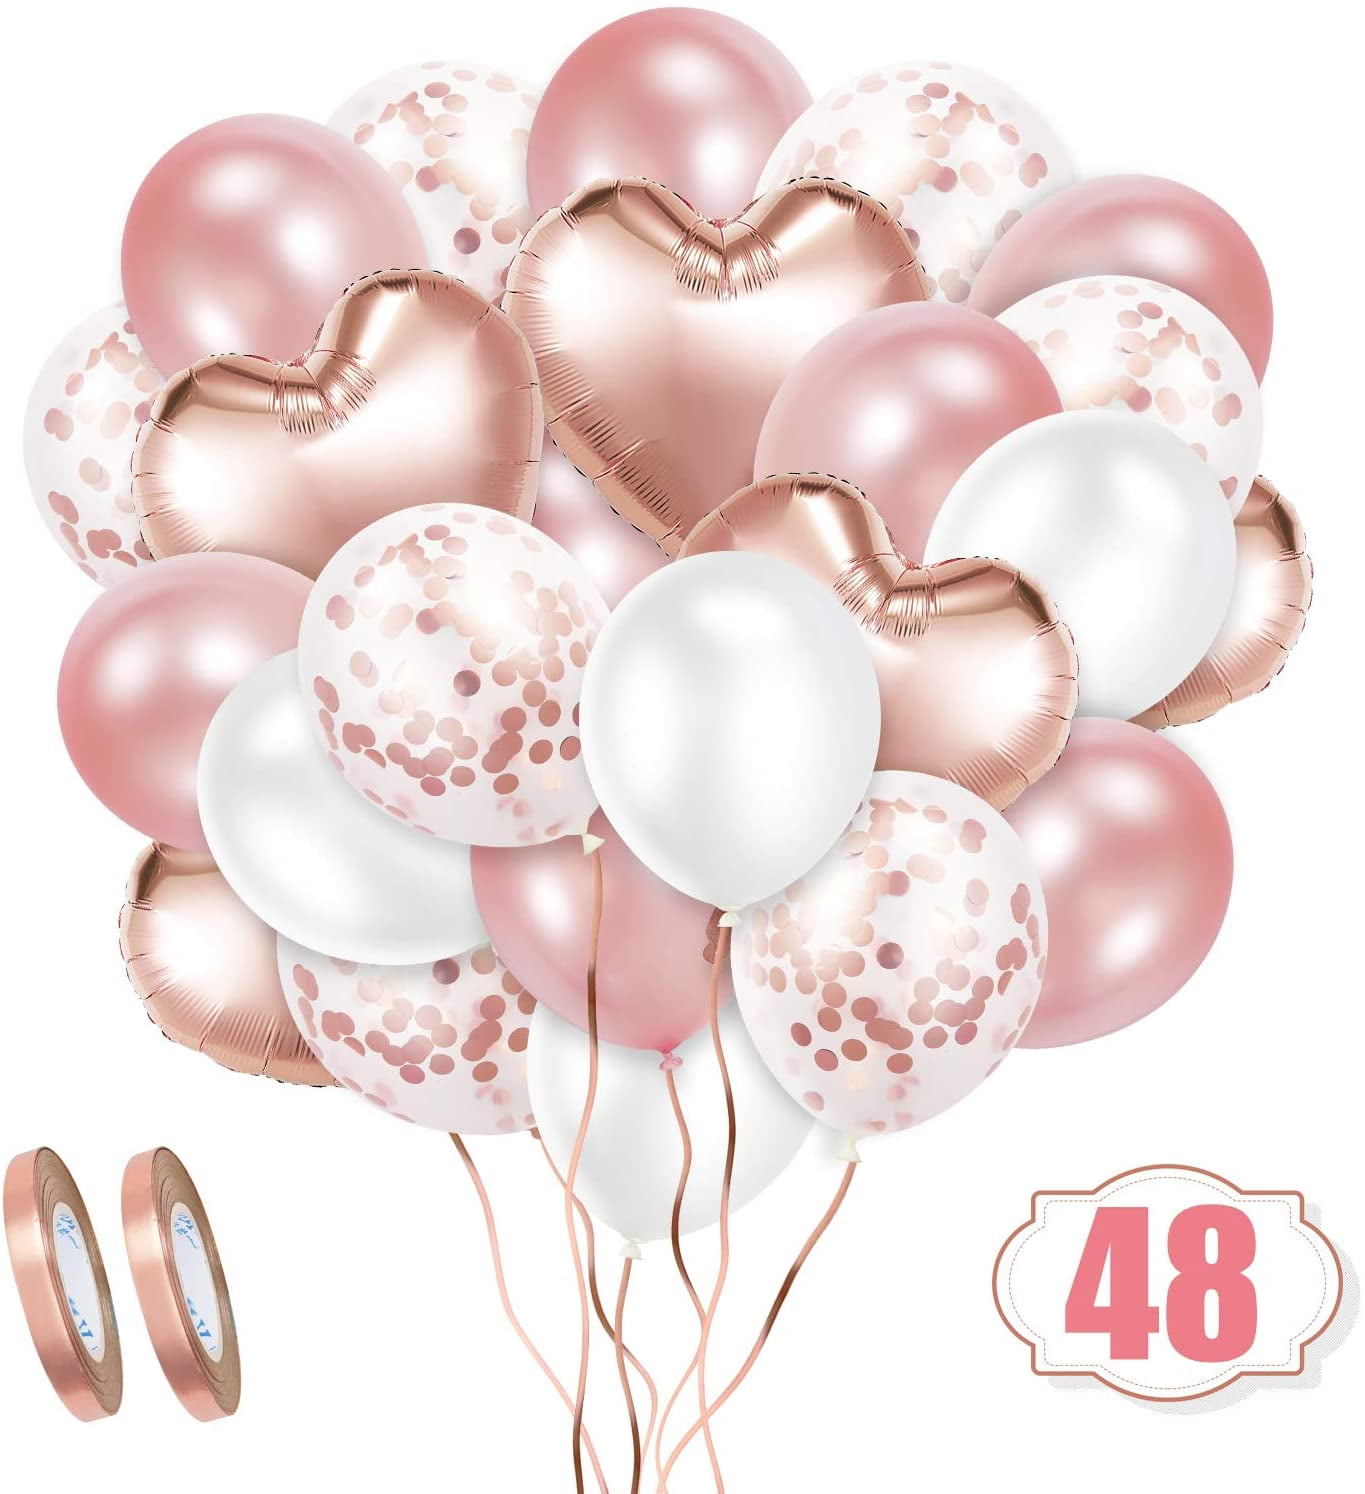 2 White Ribbon Premium  Romantic Rose Gold Balloons Pack 15 Confetti 15 Solid 